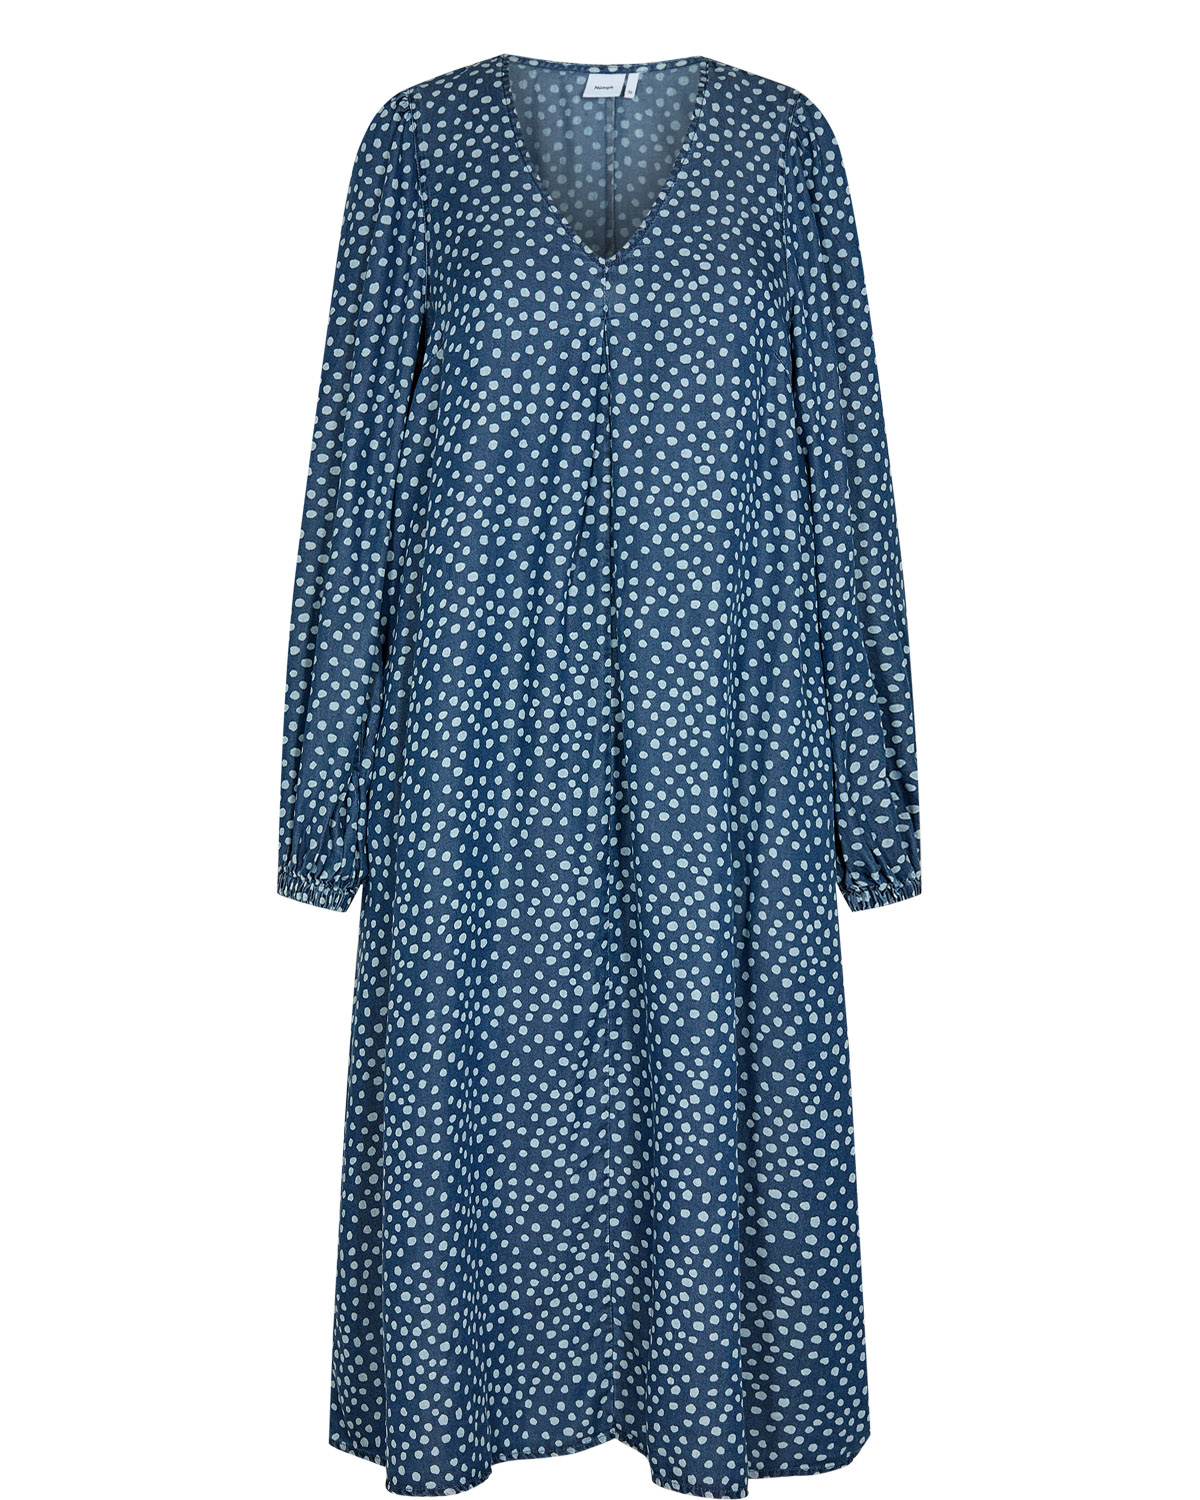 Nümph Nuvilna dress in medium blue denim shade